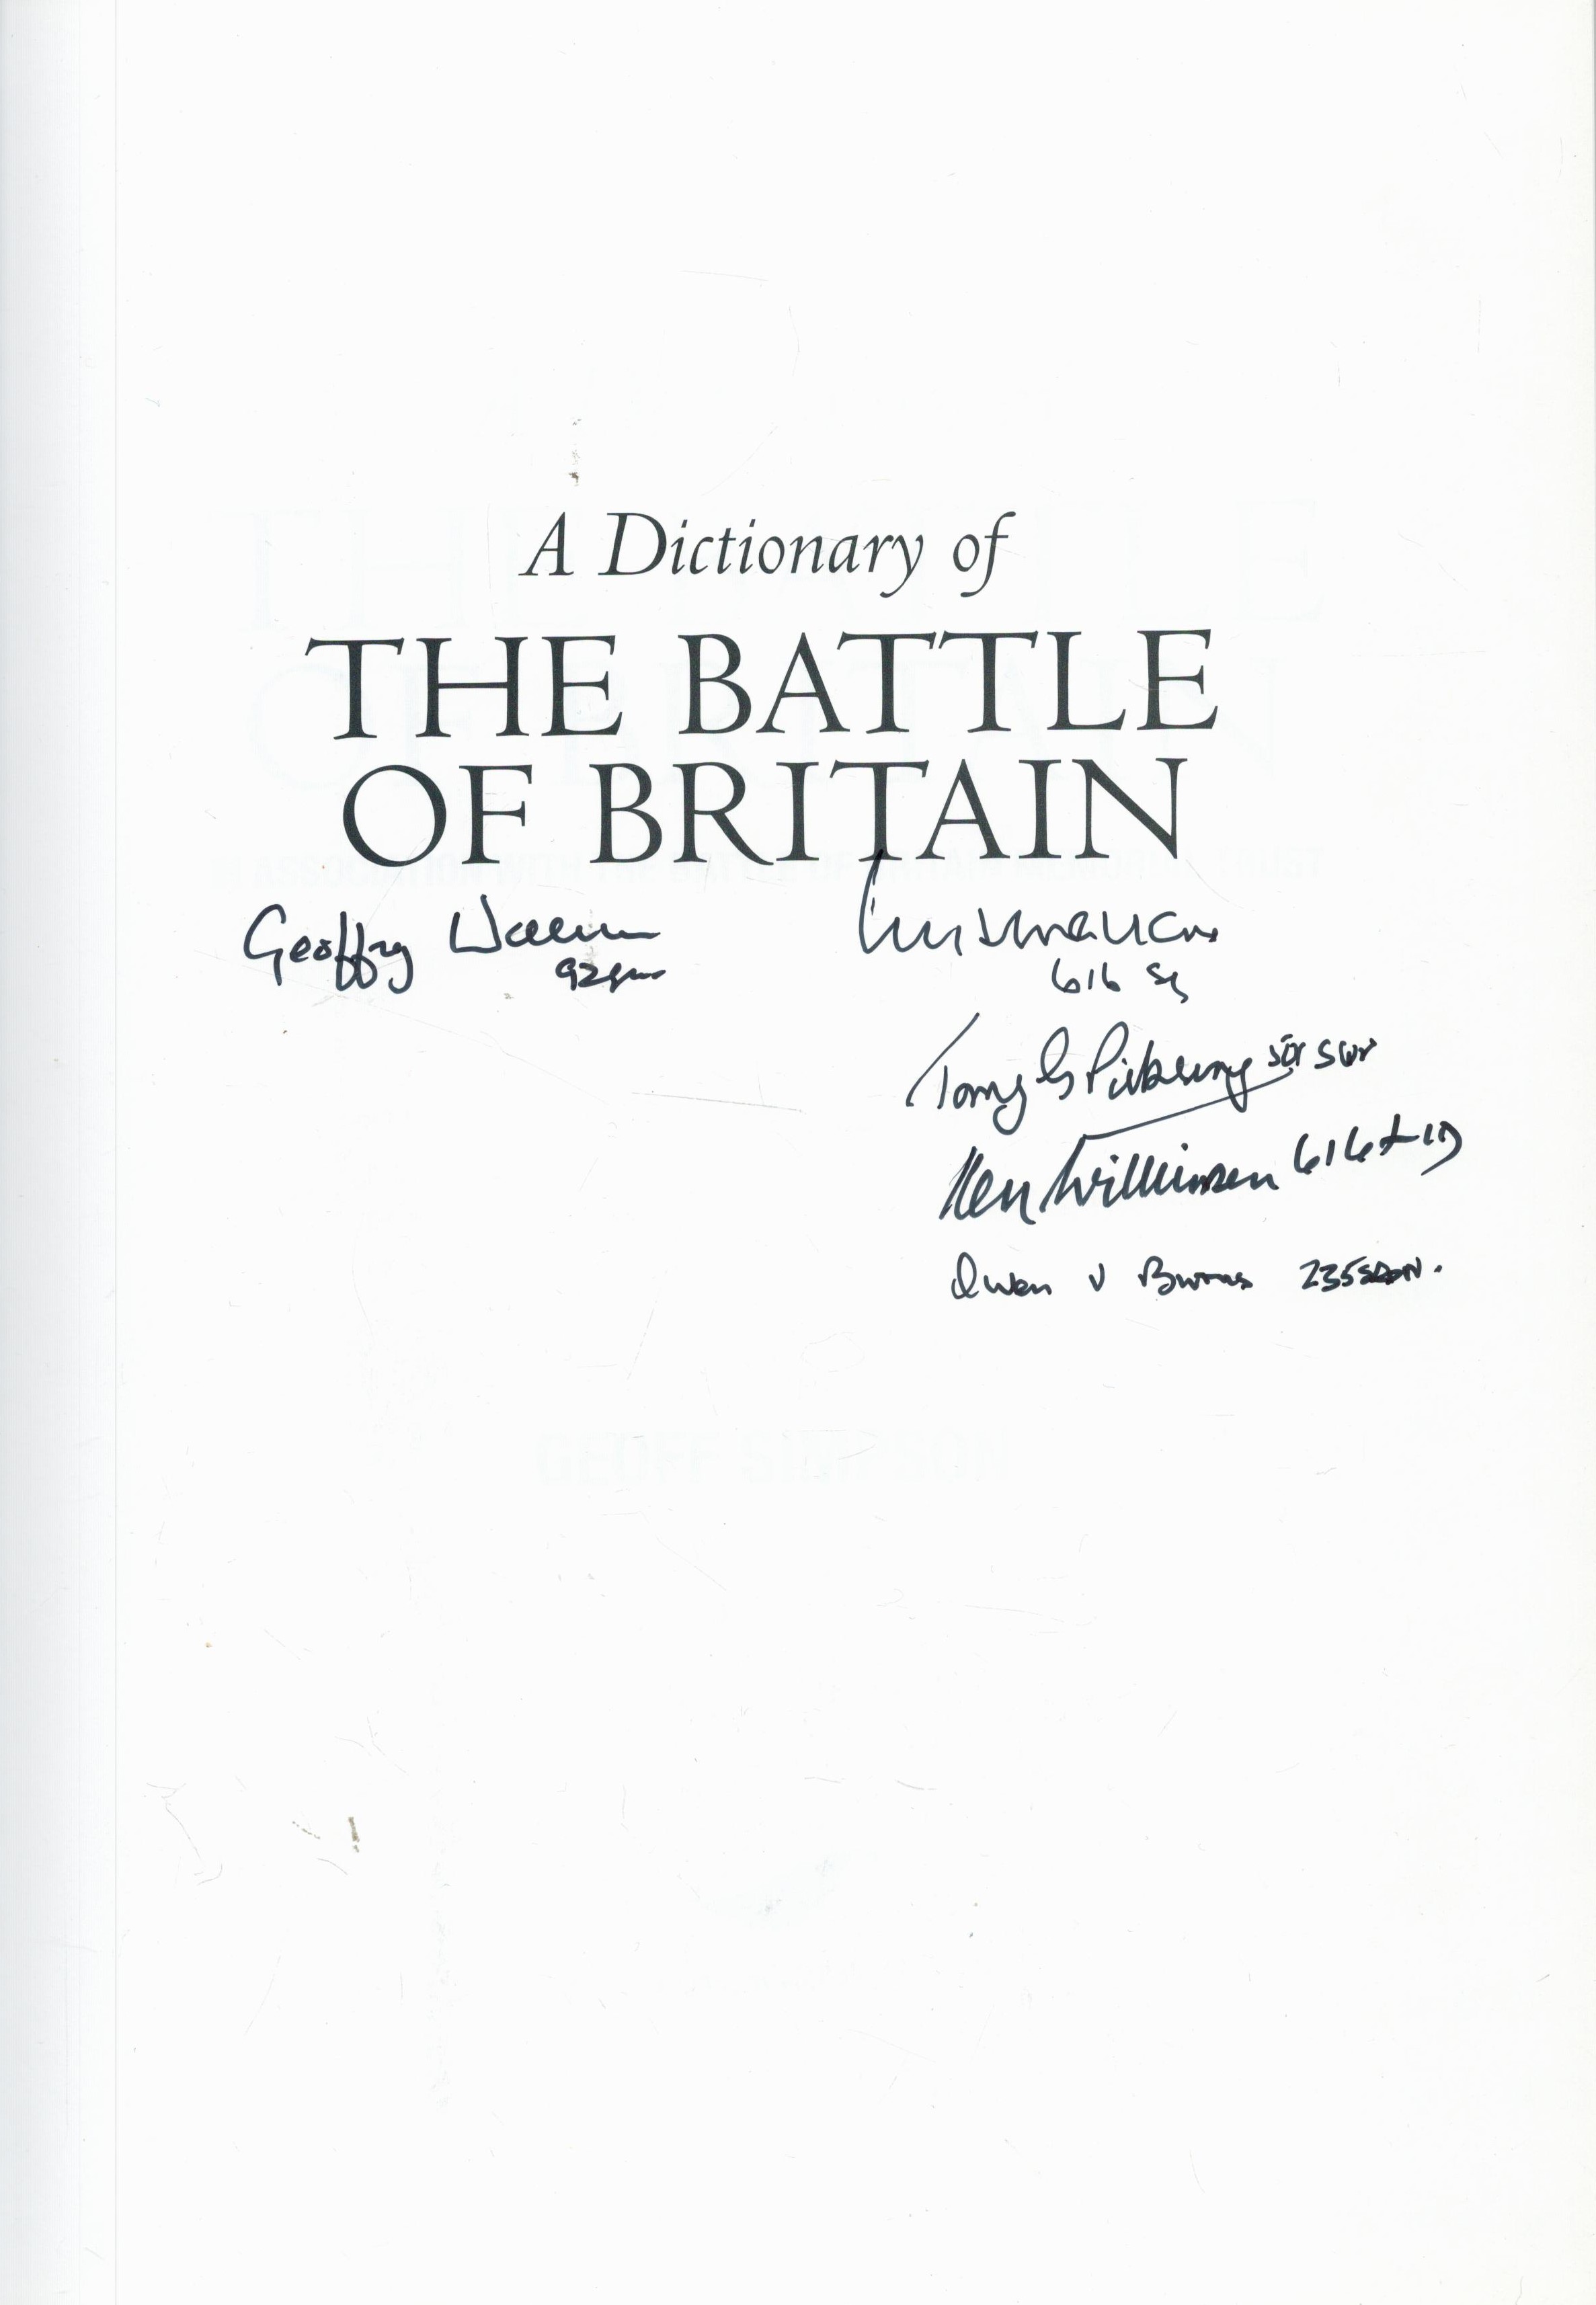 WW2 RAF Geoffrey Wellum, William Walker, Tony G Pickering, Ken Wilkinson and Owen V Burns Signed 1st - Image 2 of 4